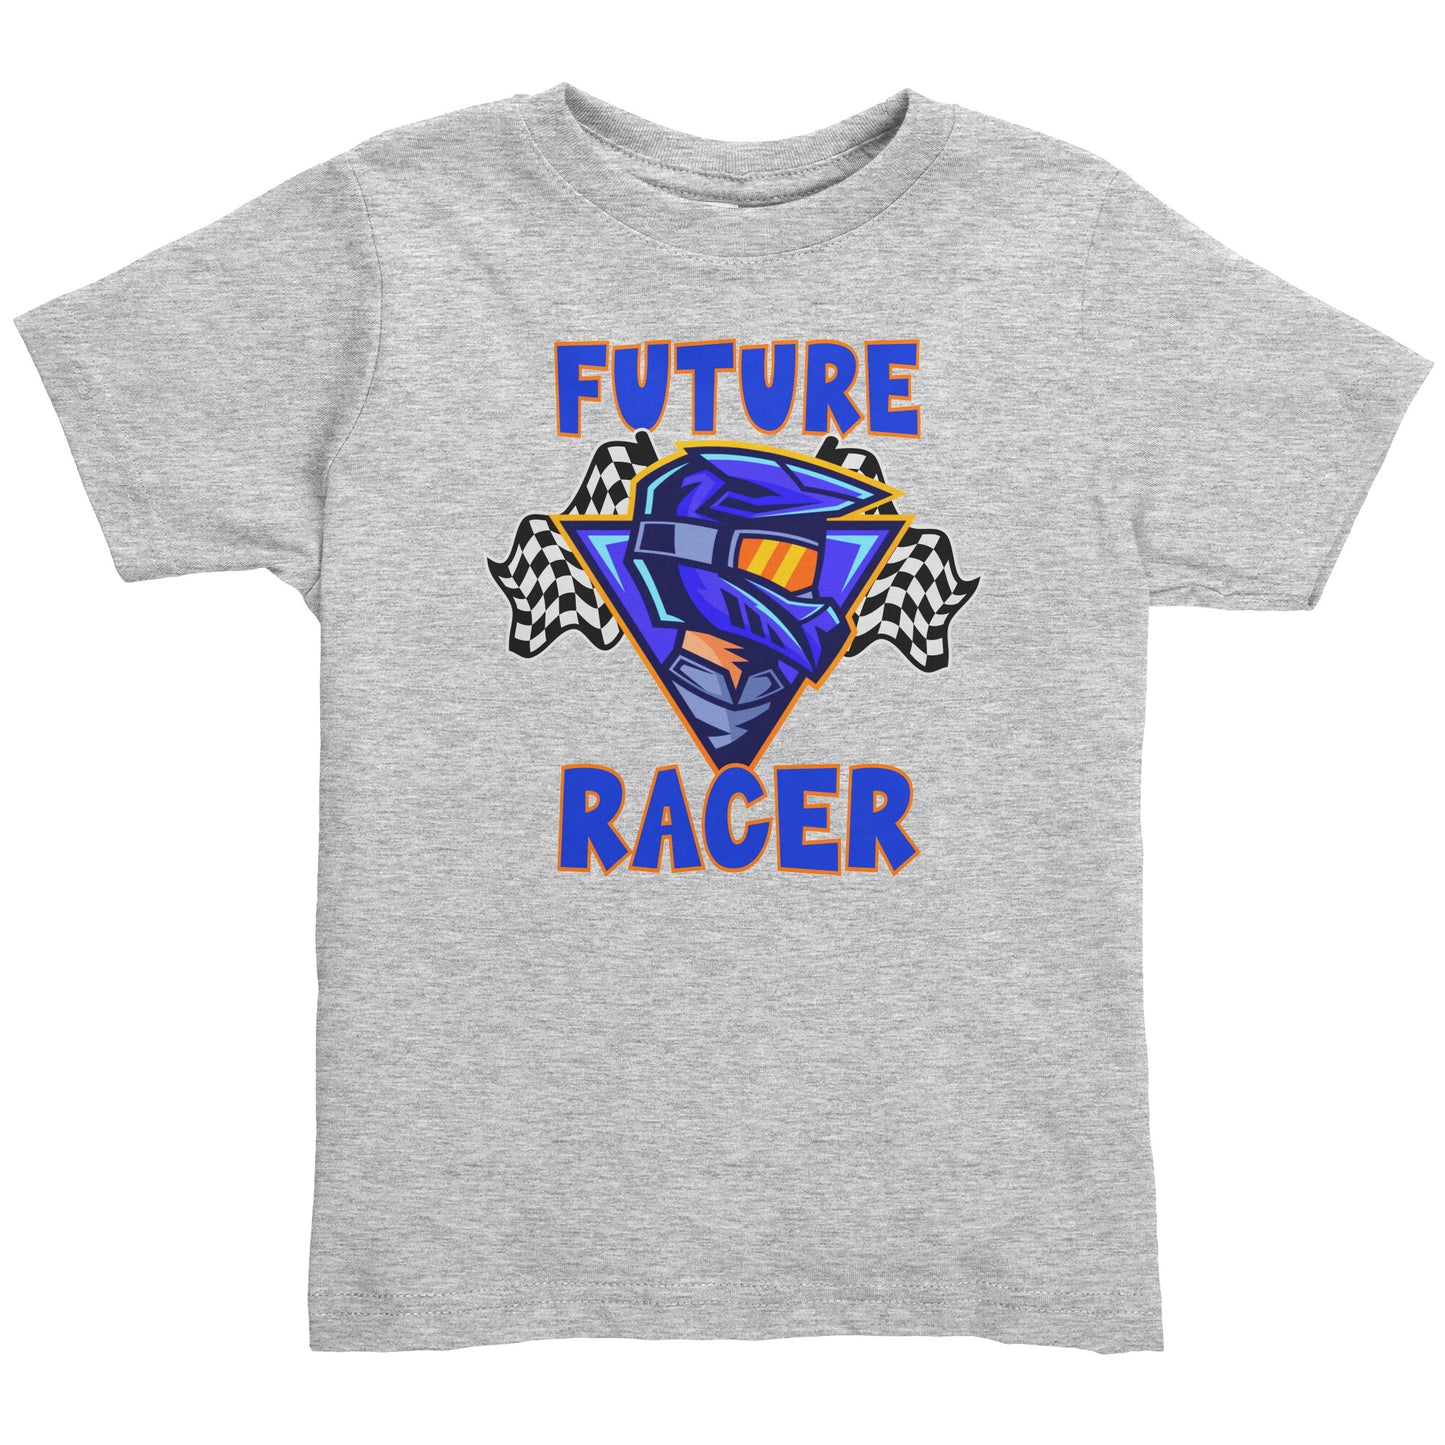 Future Racer Toddler T-Shirt